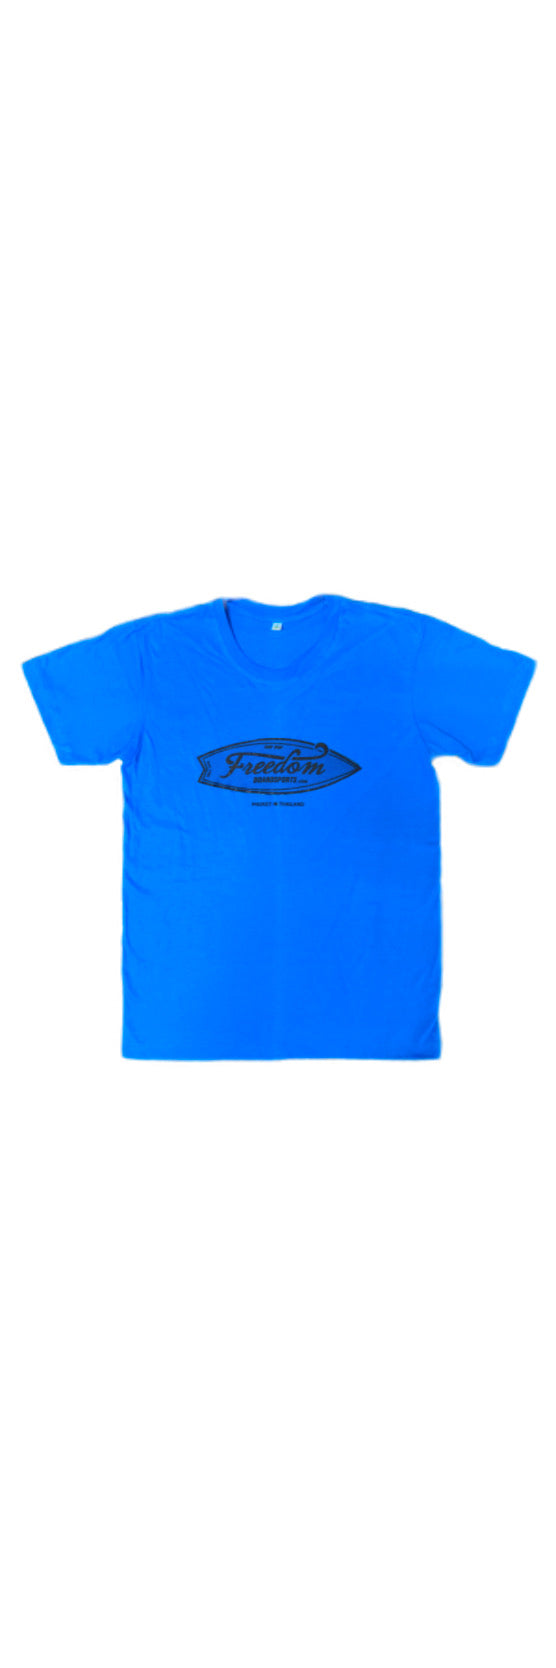 Freedom Boardsports Cotton T-Shirt